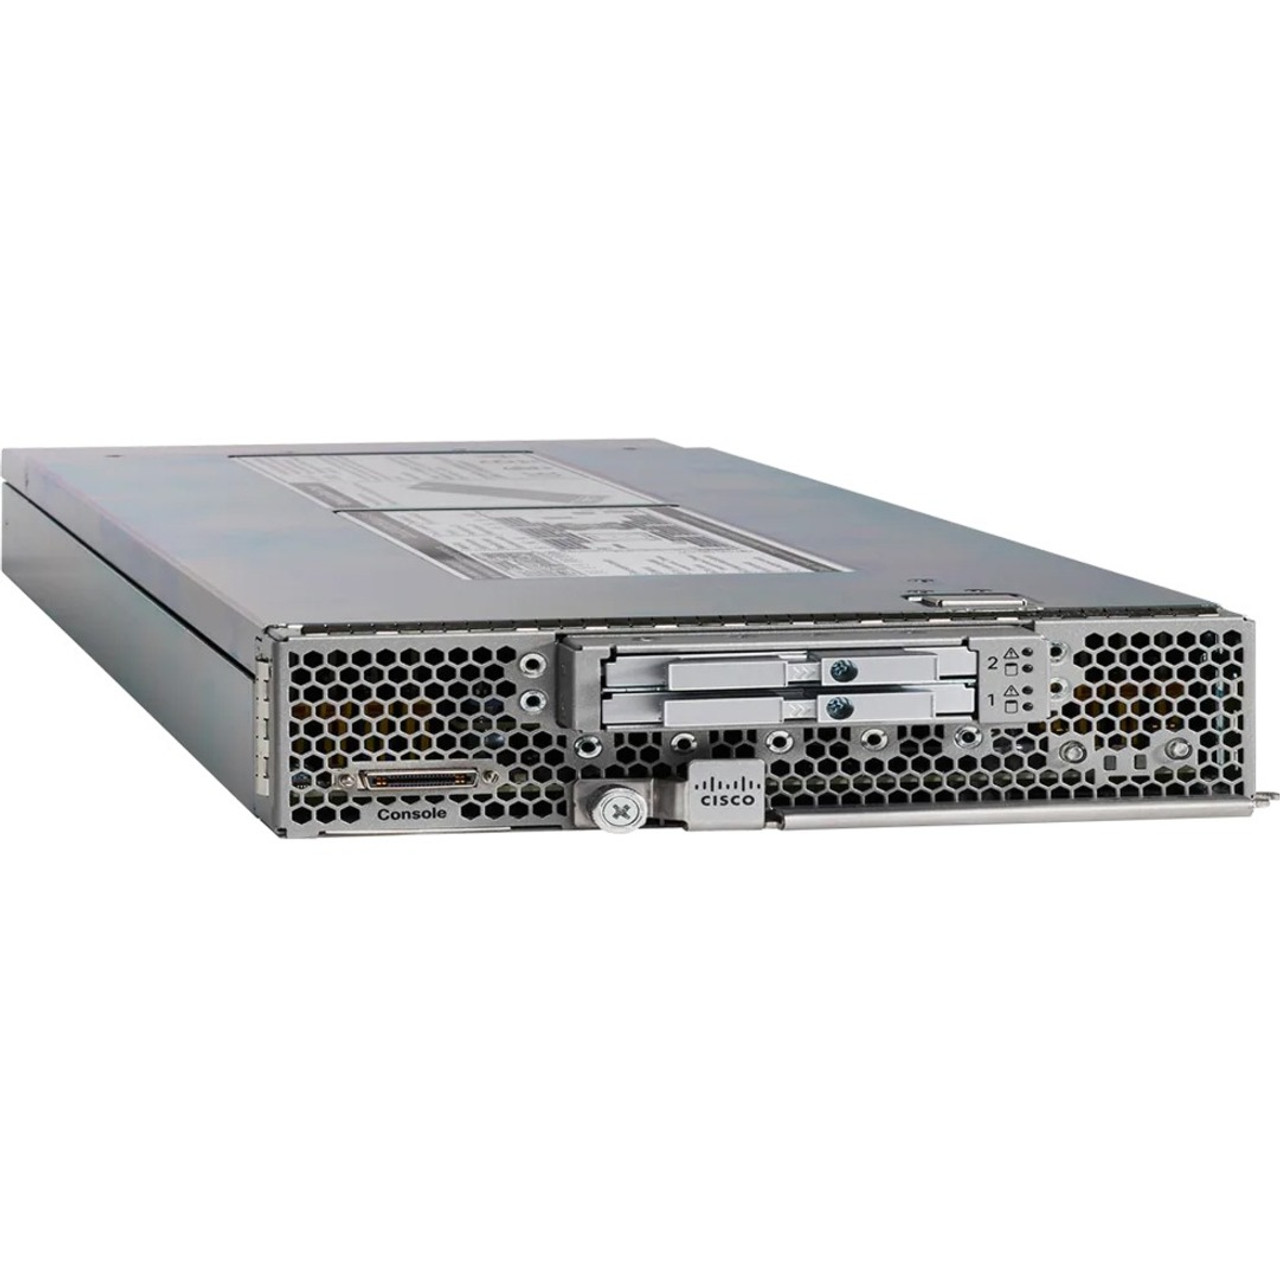 Cisco Barebone System - Blade - 2 x Processor Support - UCSB-B200-M6